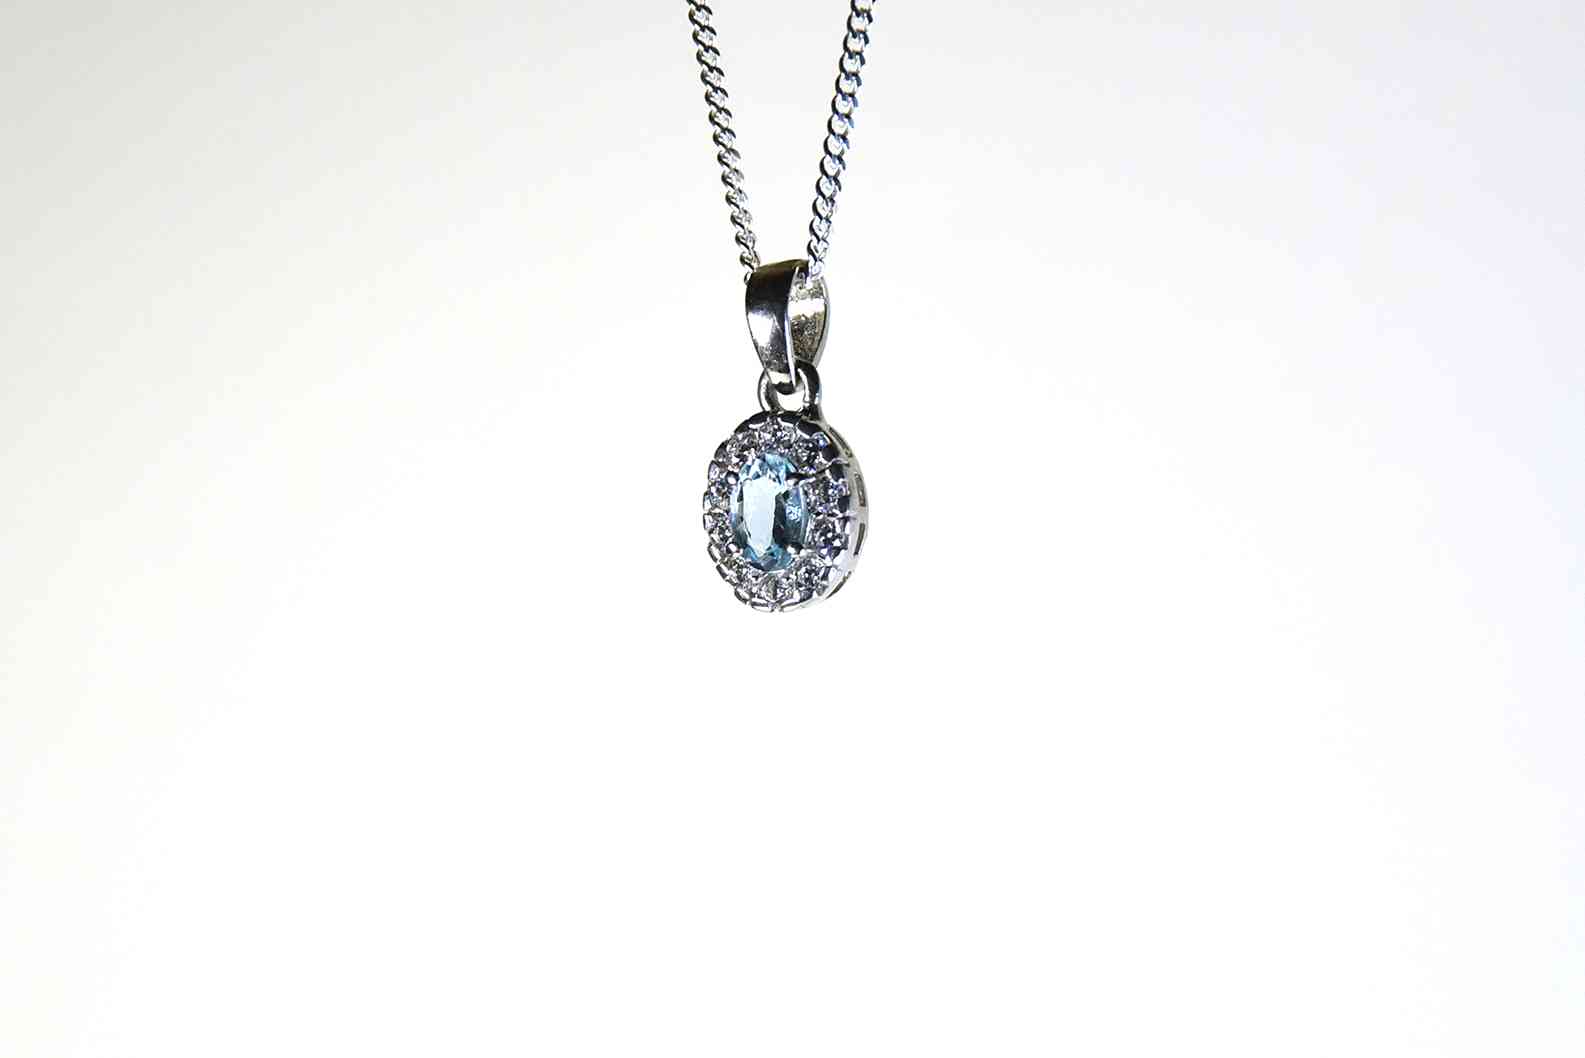 Melina Jewelry Oval Cut Aquamarine Cubic Zirconia Pendant Free Necklace